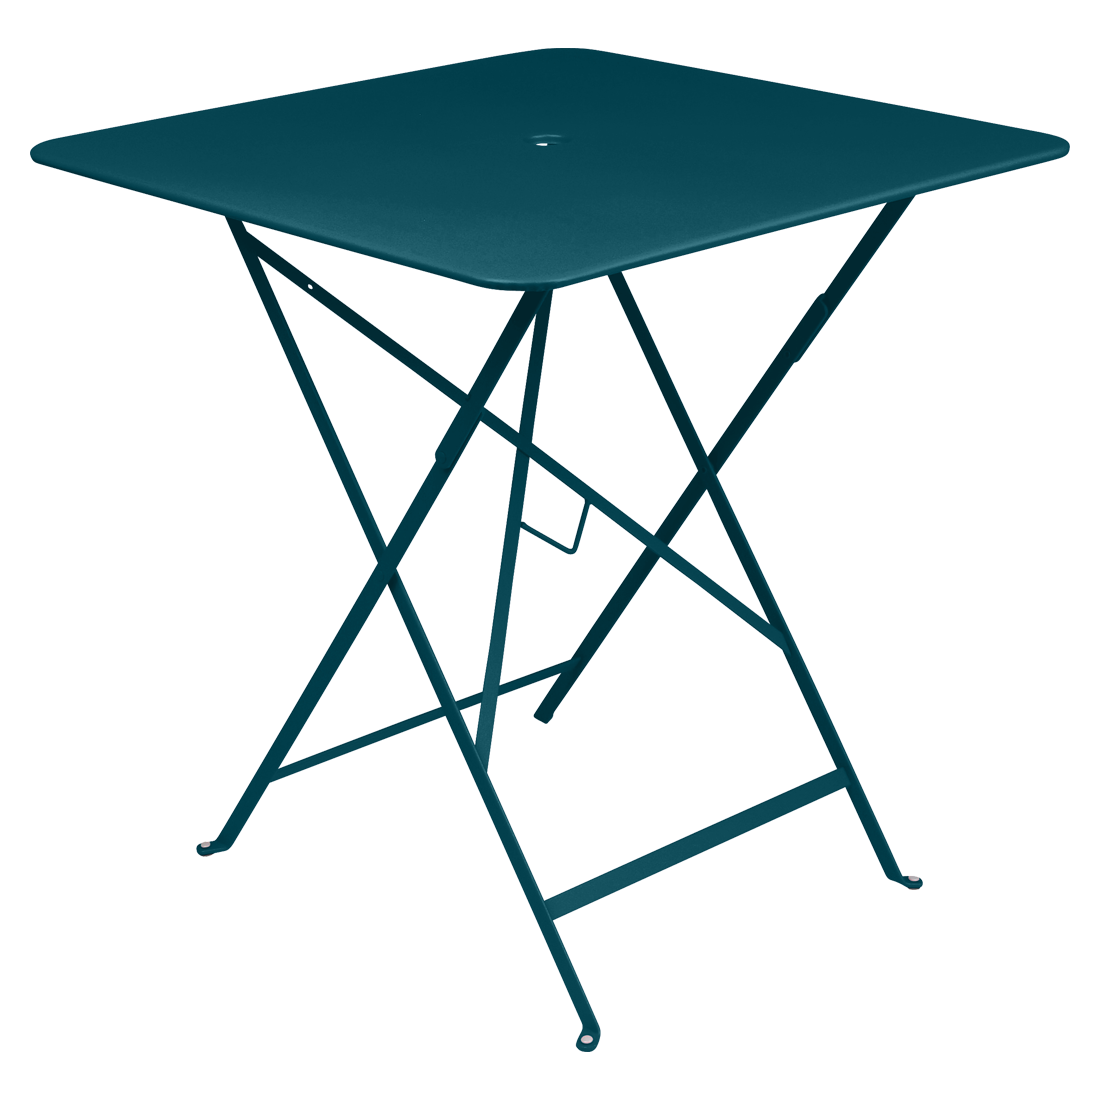 Bistro Square Table by Fermob - 71 x 71cm